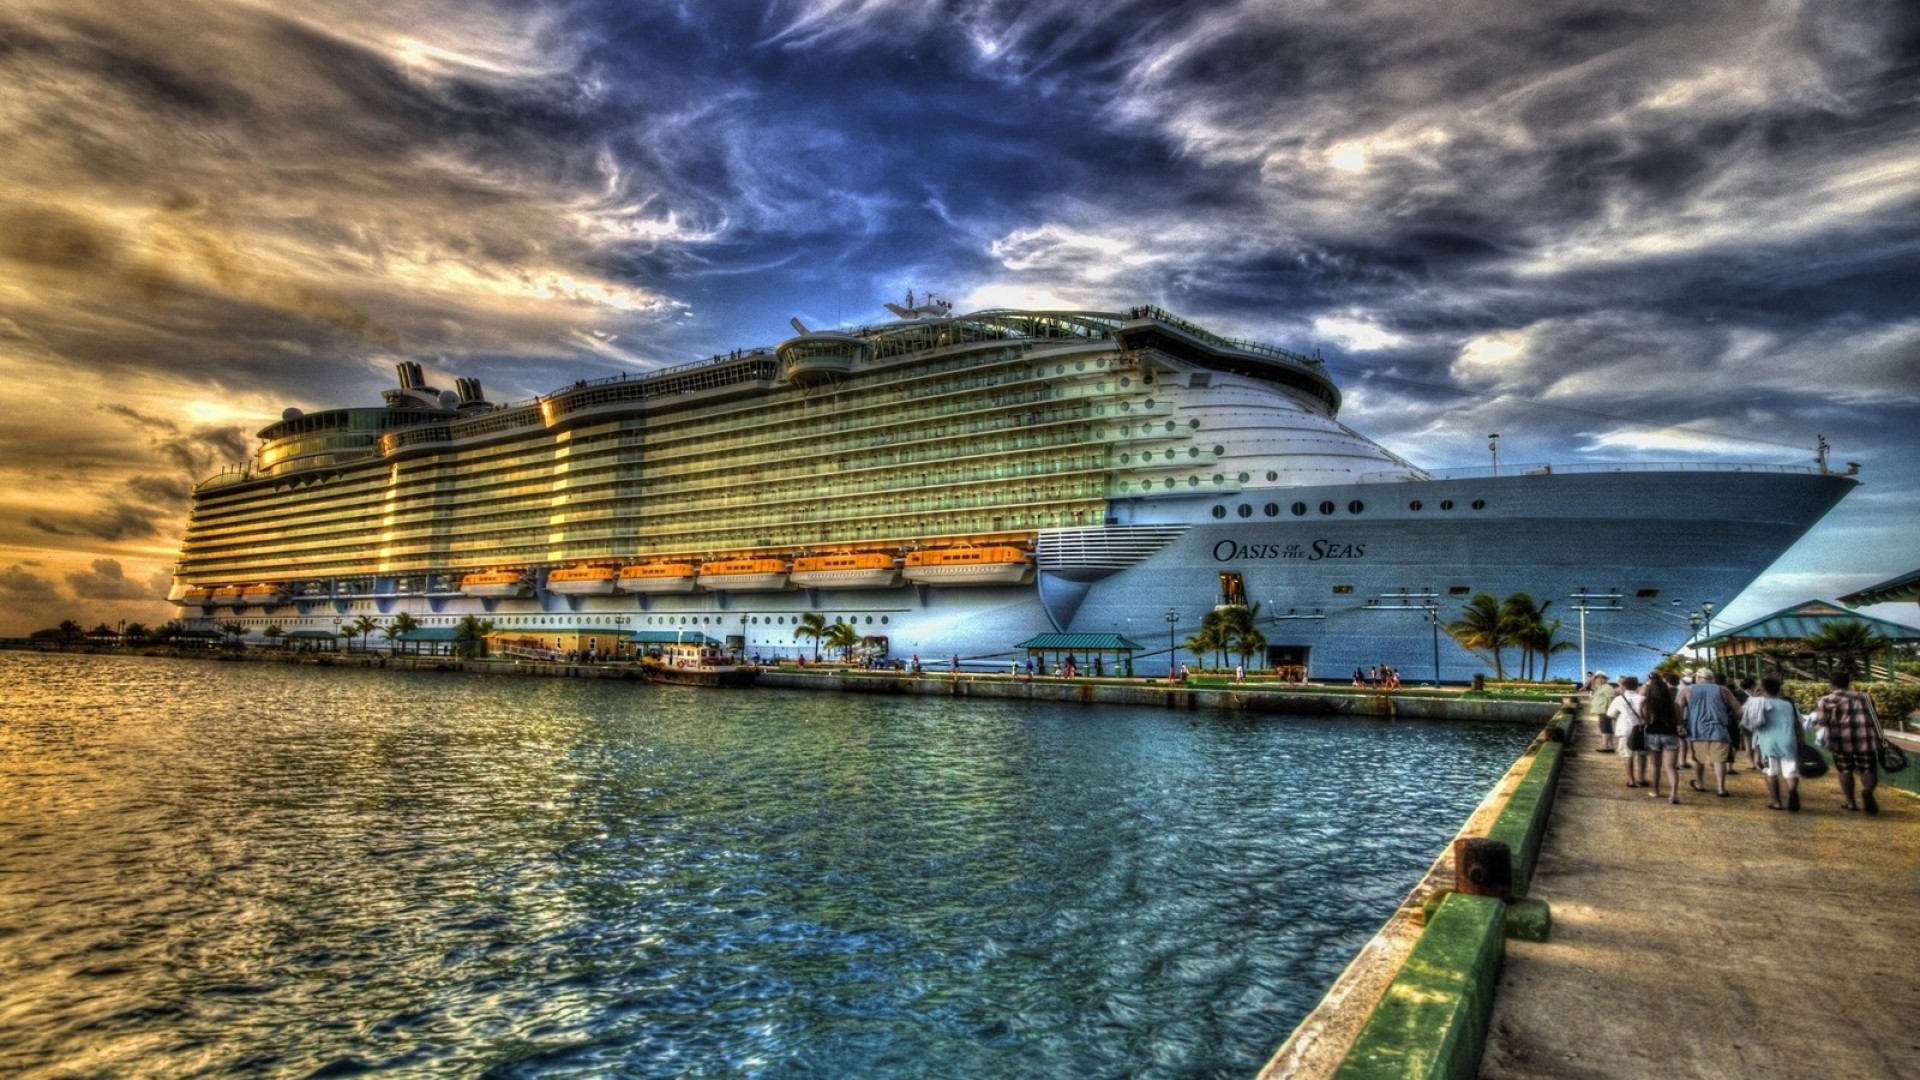 ship wallpaper hd,sky,architecture,cruise ship,cloud,vehicle